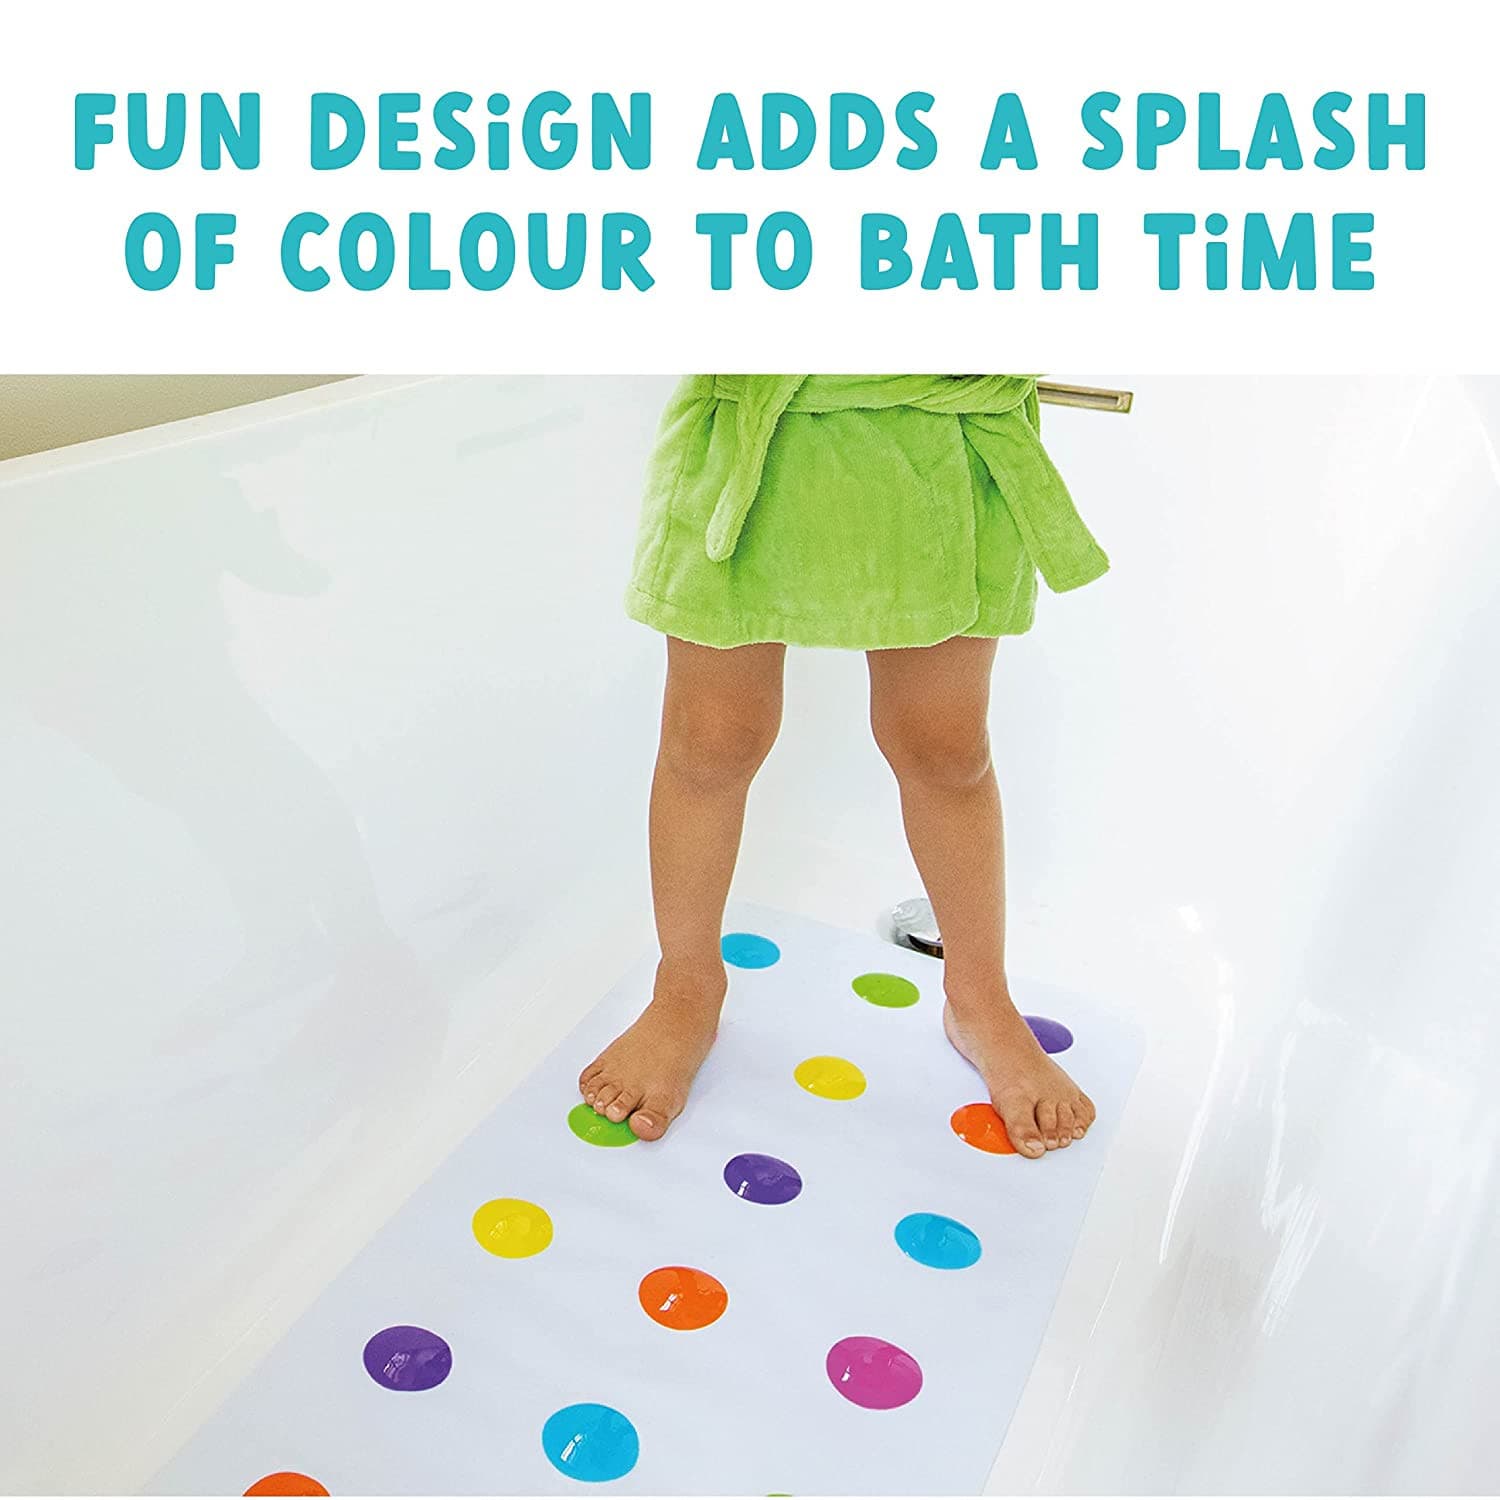 Munchkin Dots Bath Mat for Kids, Multicolored.